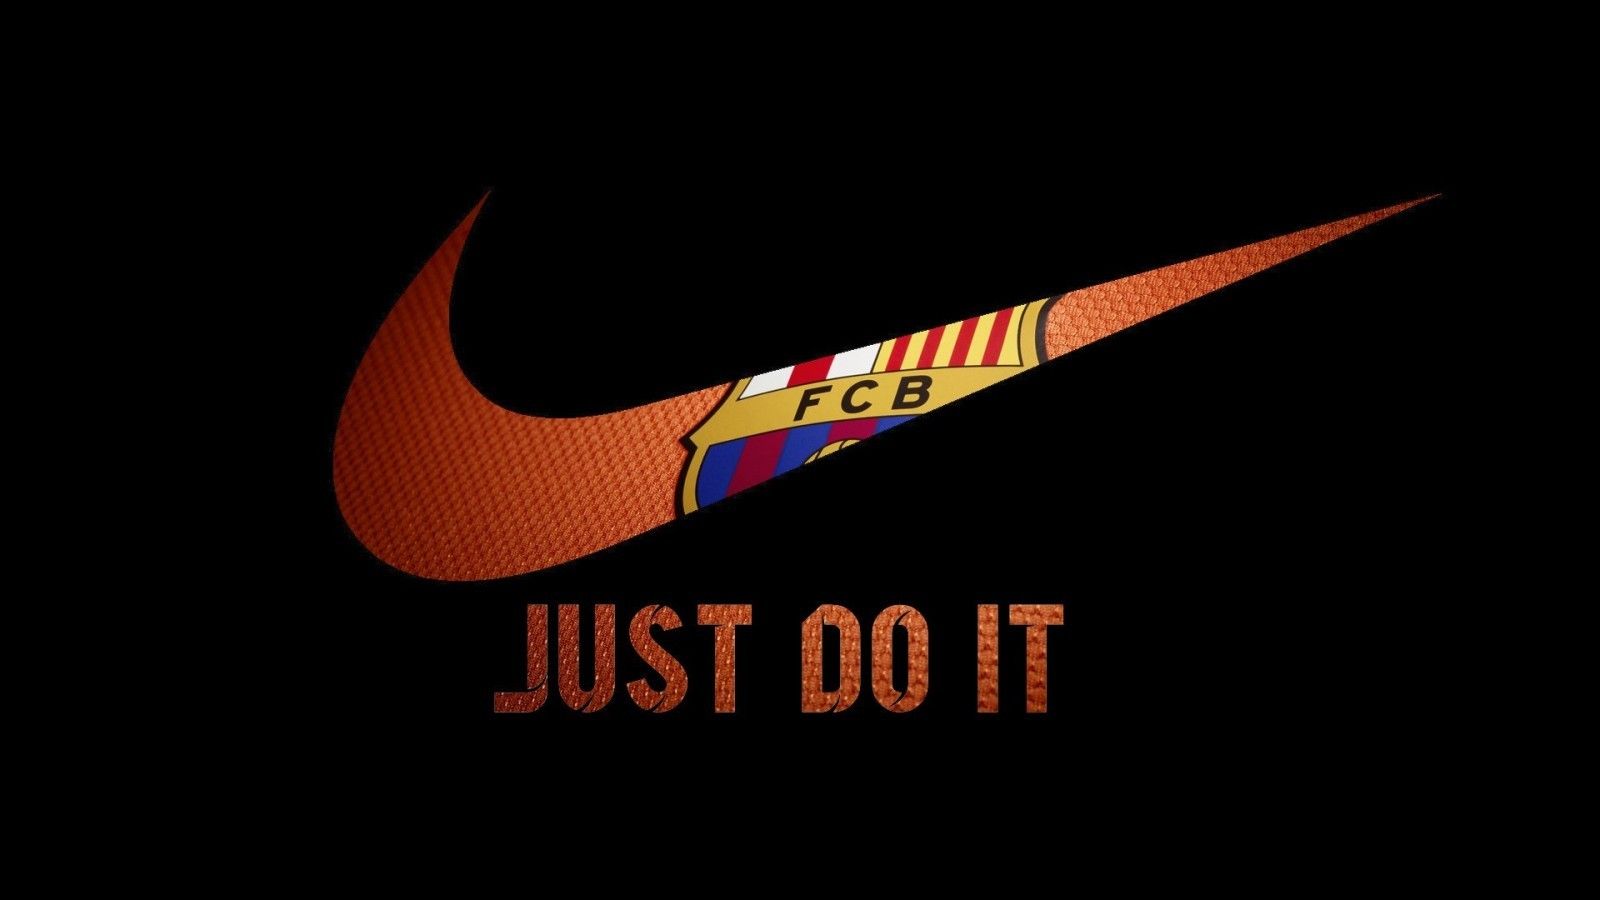 Nike Fc Barcelona Wallpapers